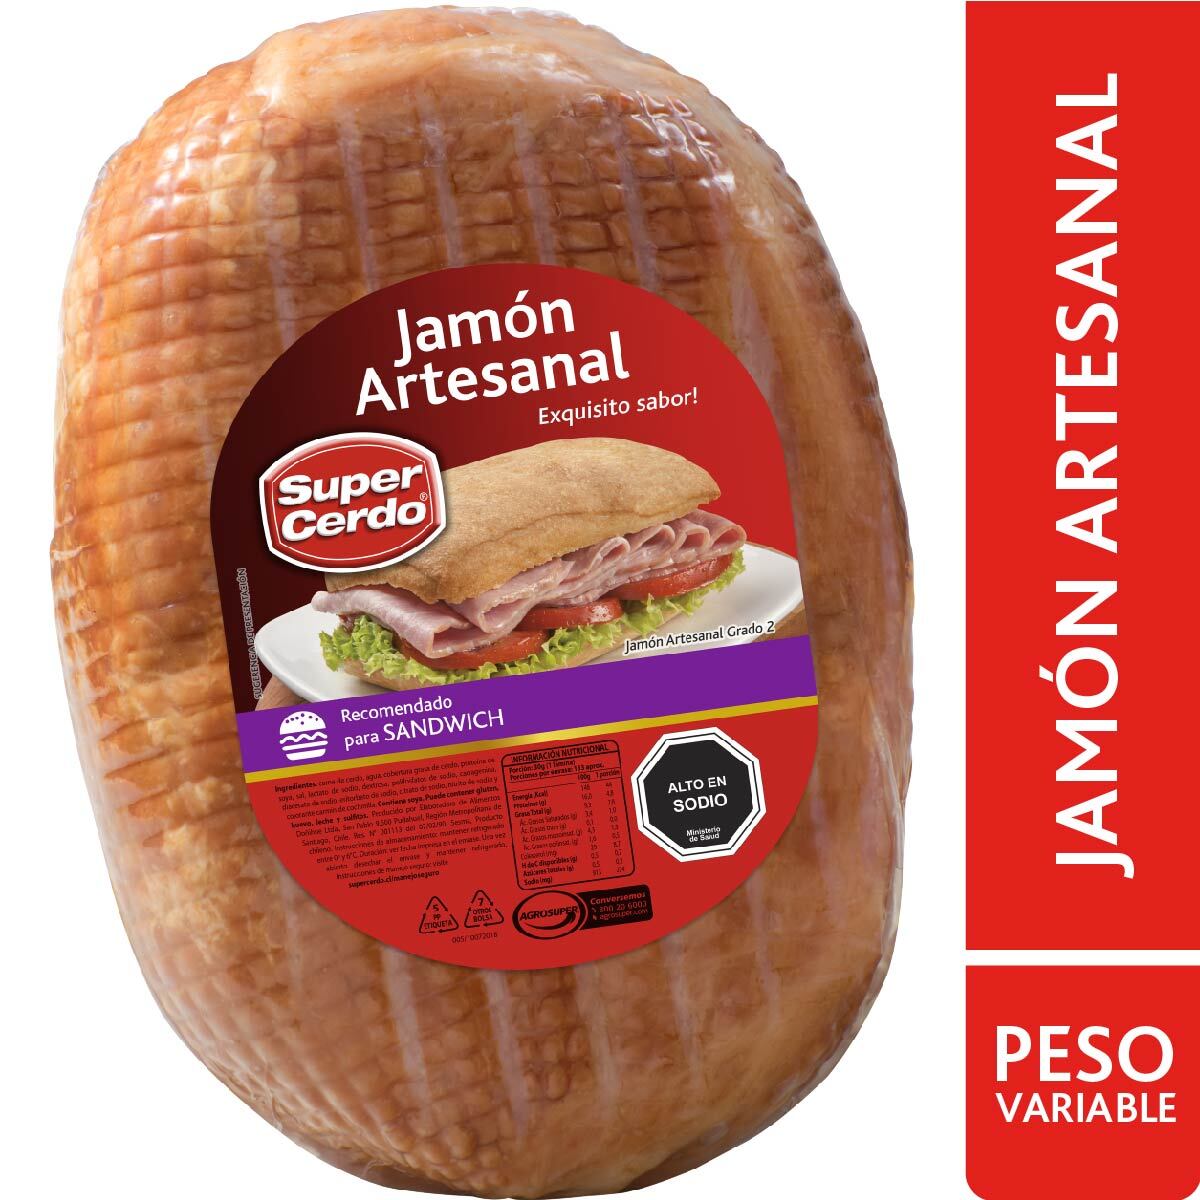 Jamón Artesanal de Cerdo